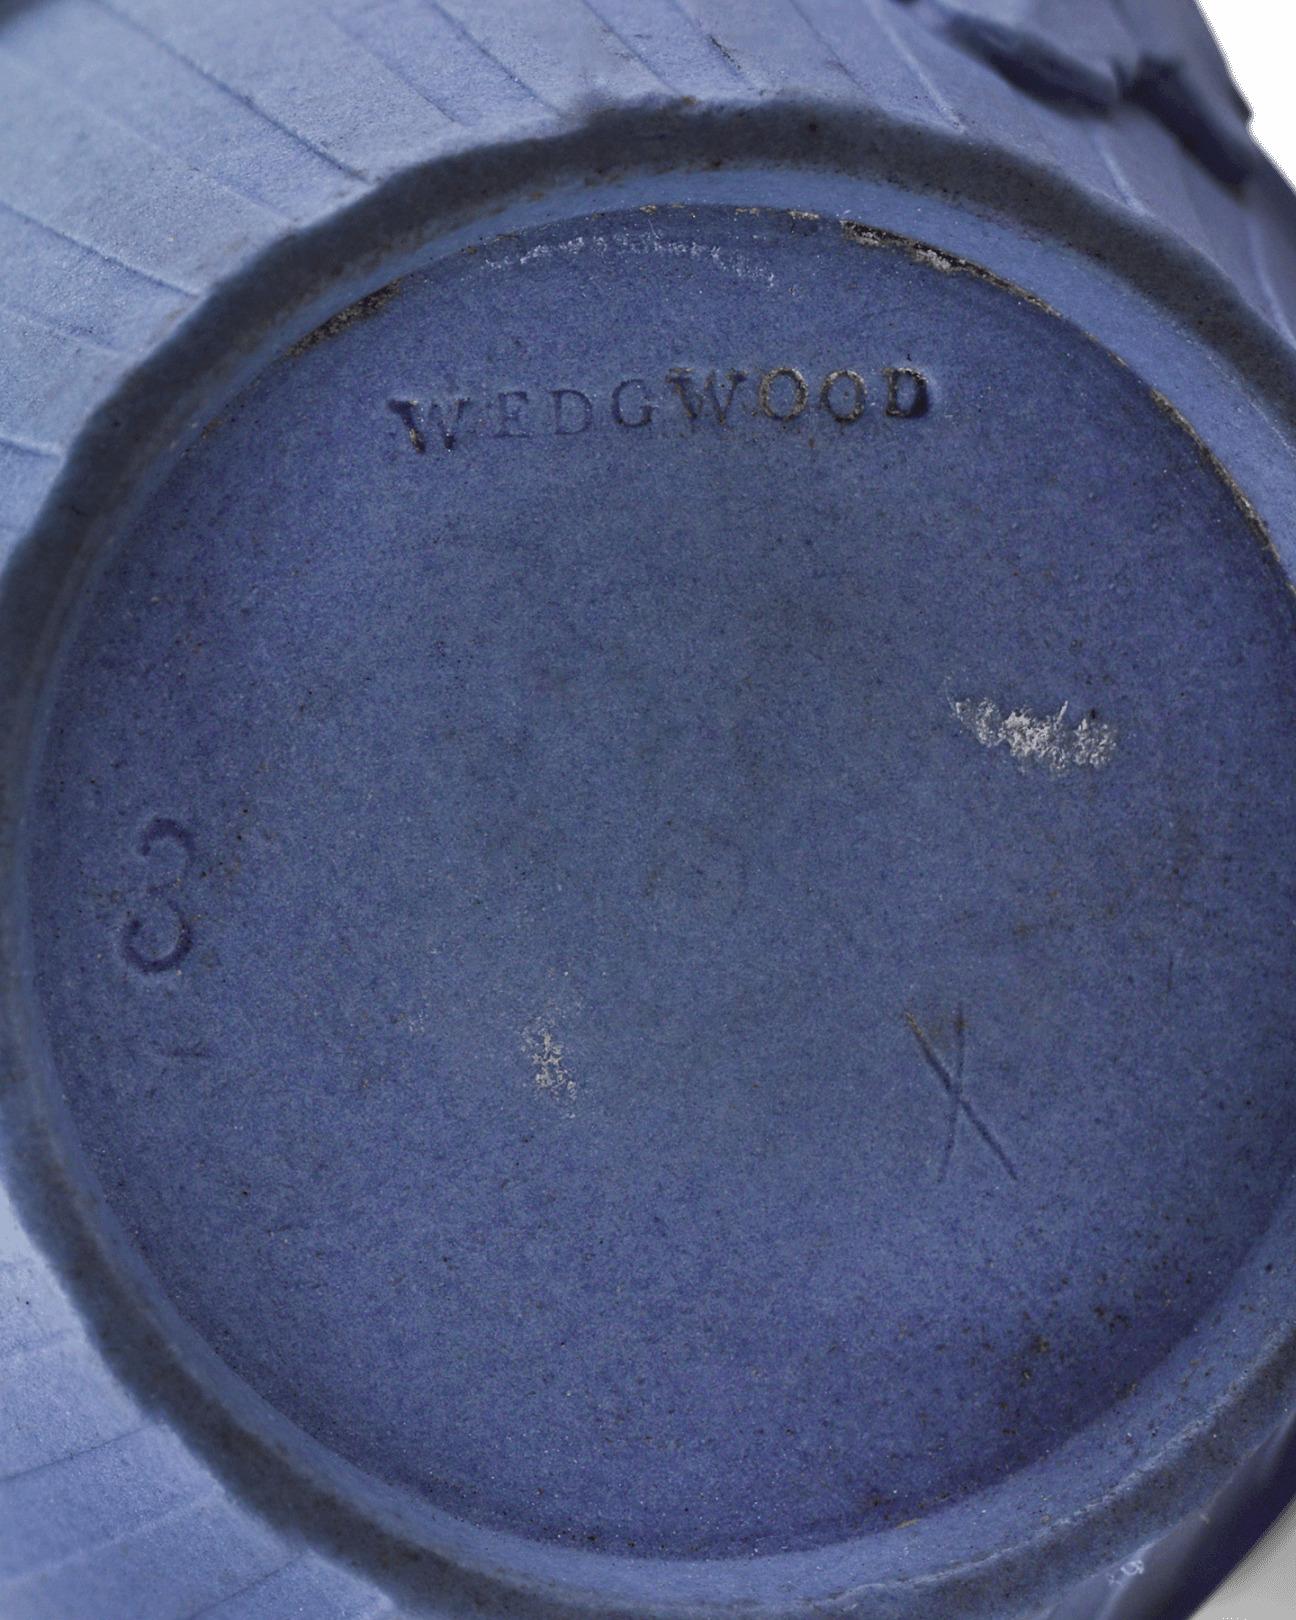 English Wedgwood Blue and White Jasperware Creamer Jug